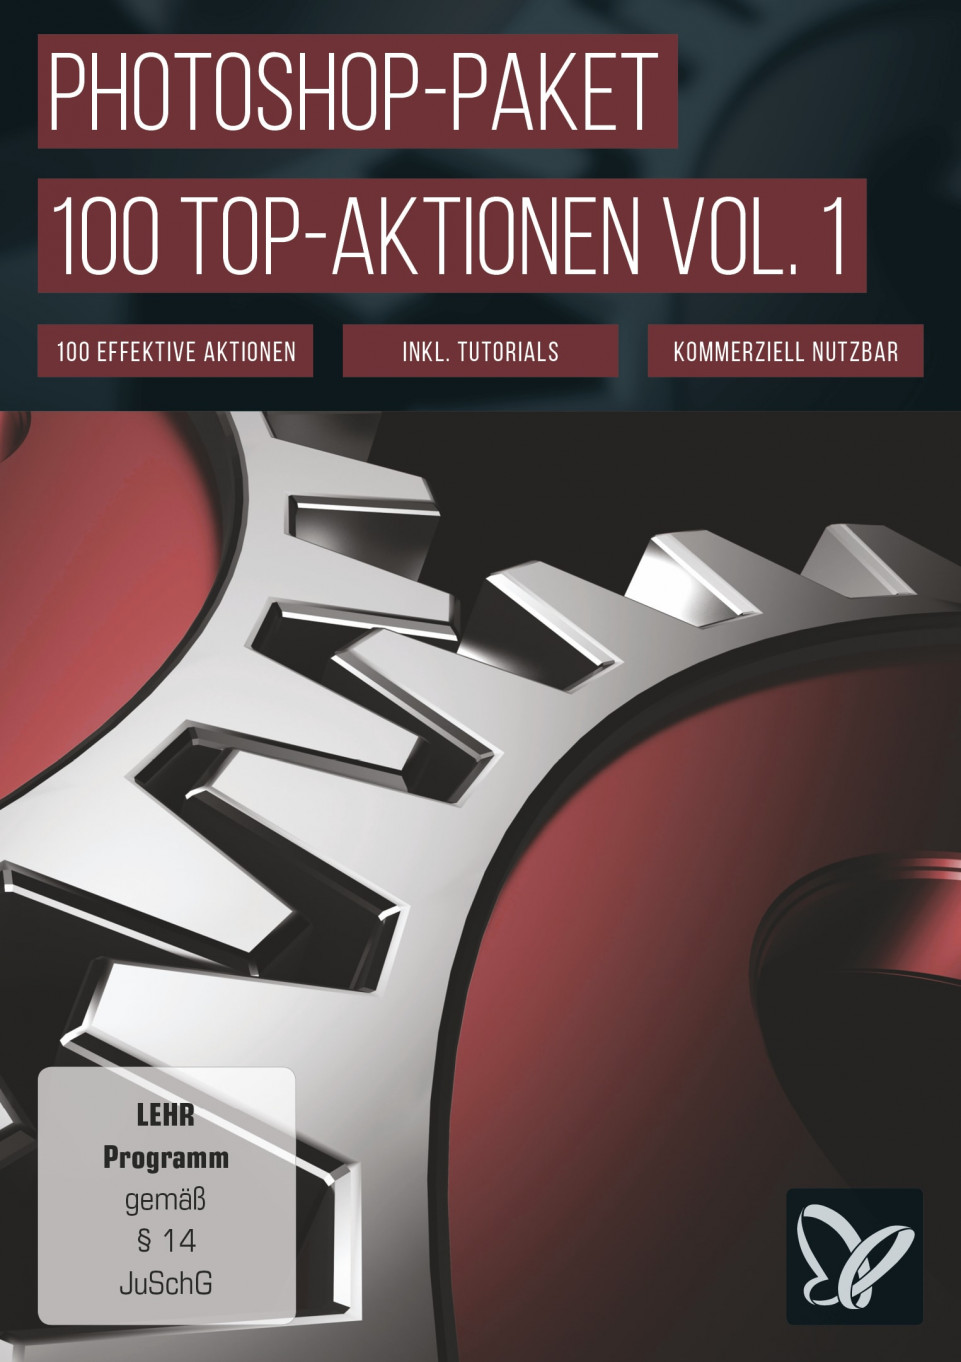 Photoshop-Aktionen-Paket - Vol. 1 - Top 100 Aktionen